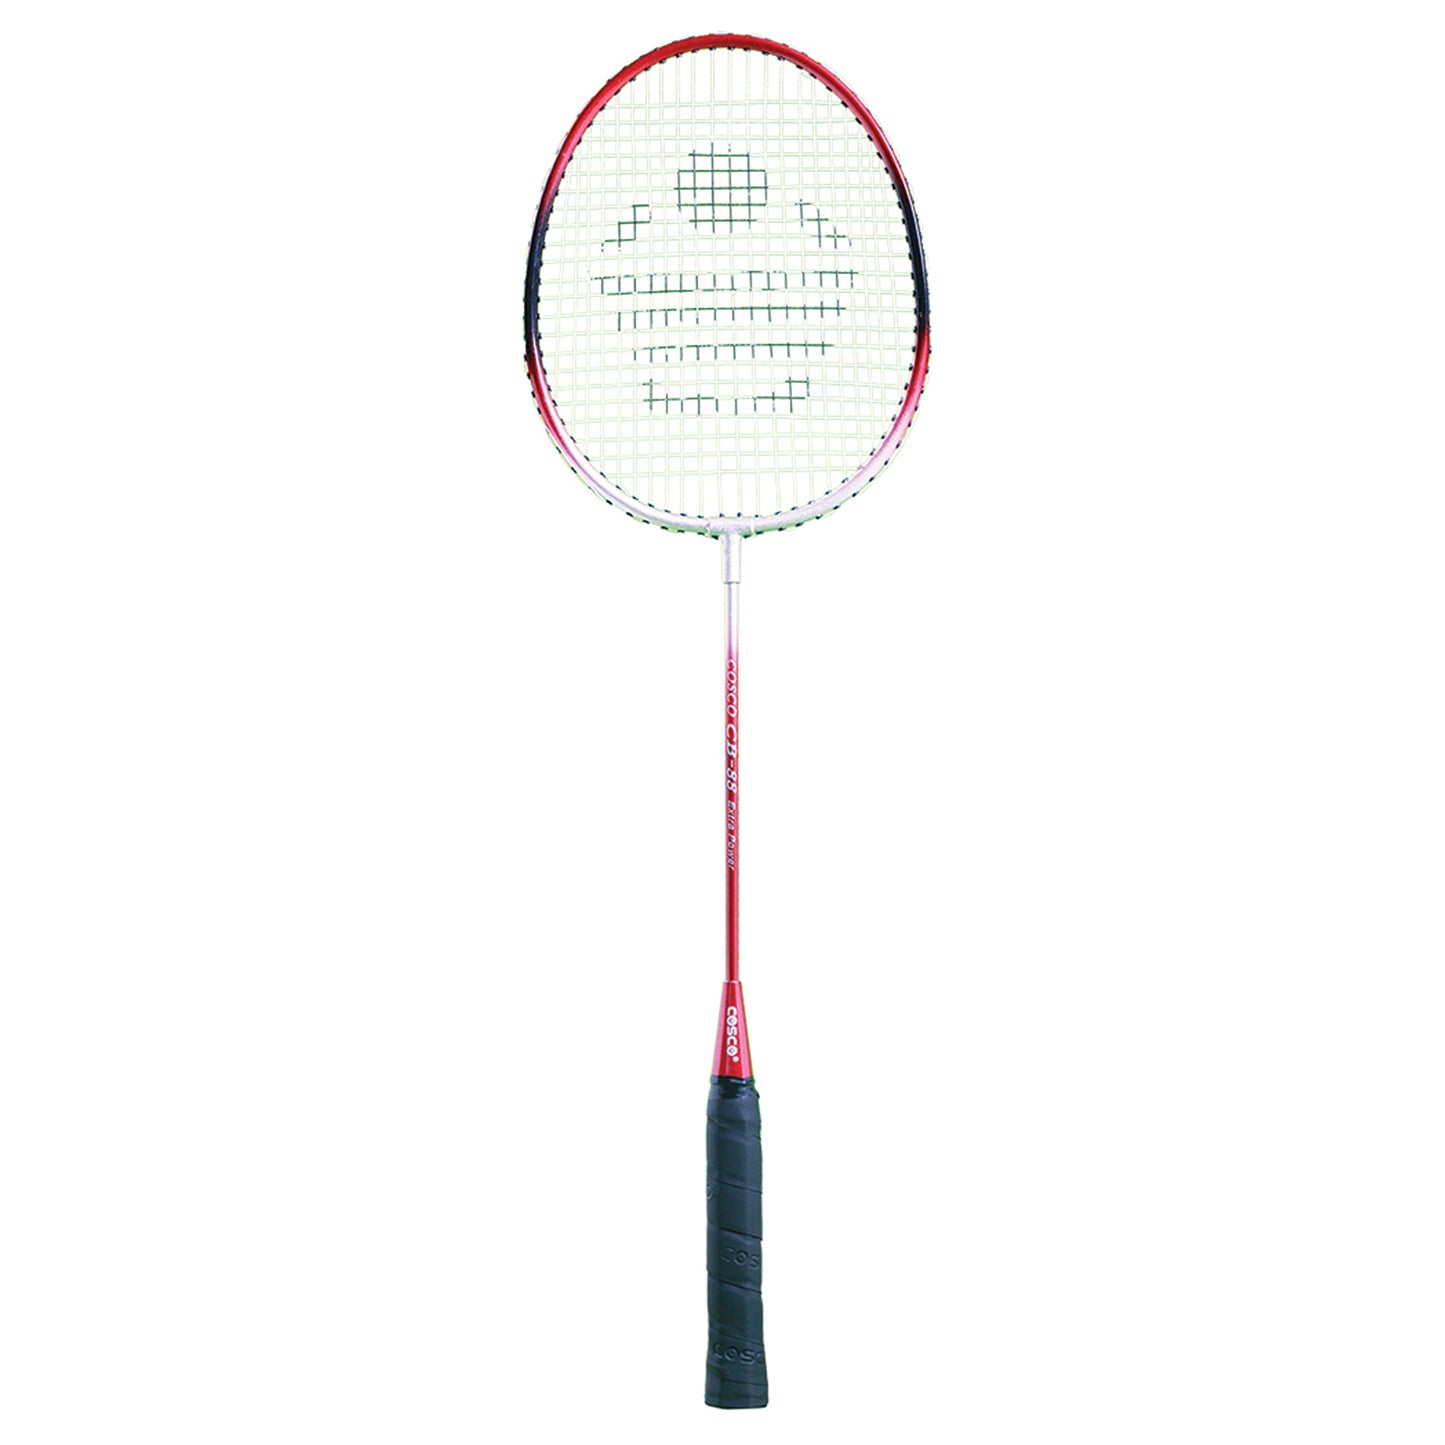 Cosco 29015 CB 88 Badminton Racquet, Assorted - Best Price online Prokicksports.com